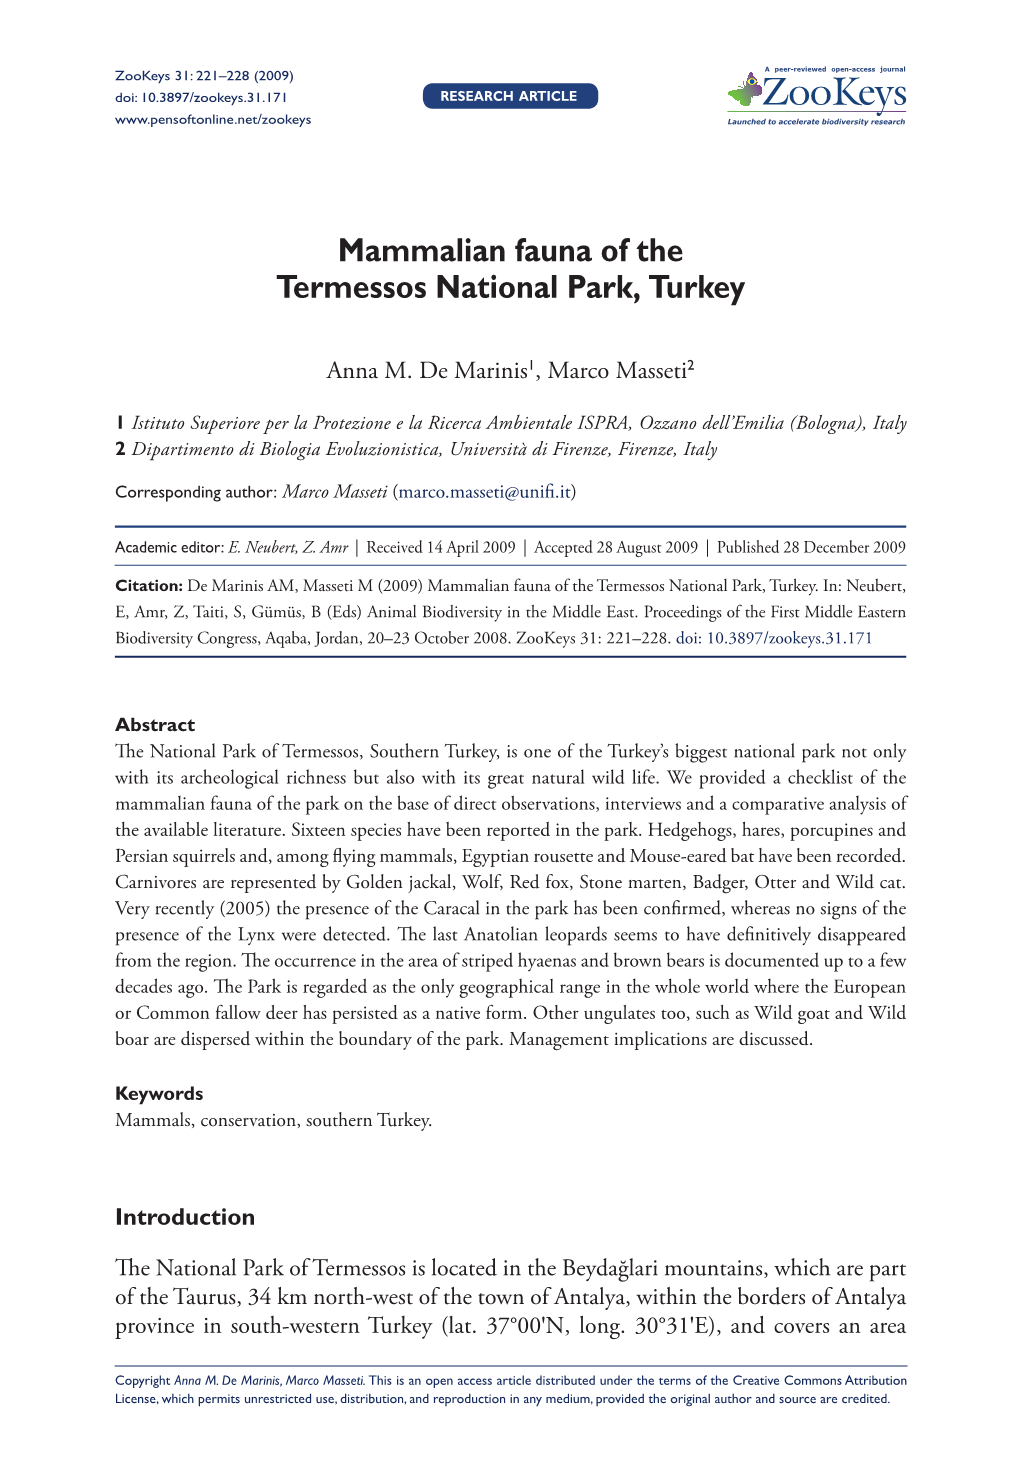 Mammalian Fauna of the Termessos National Park, Turkey